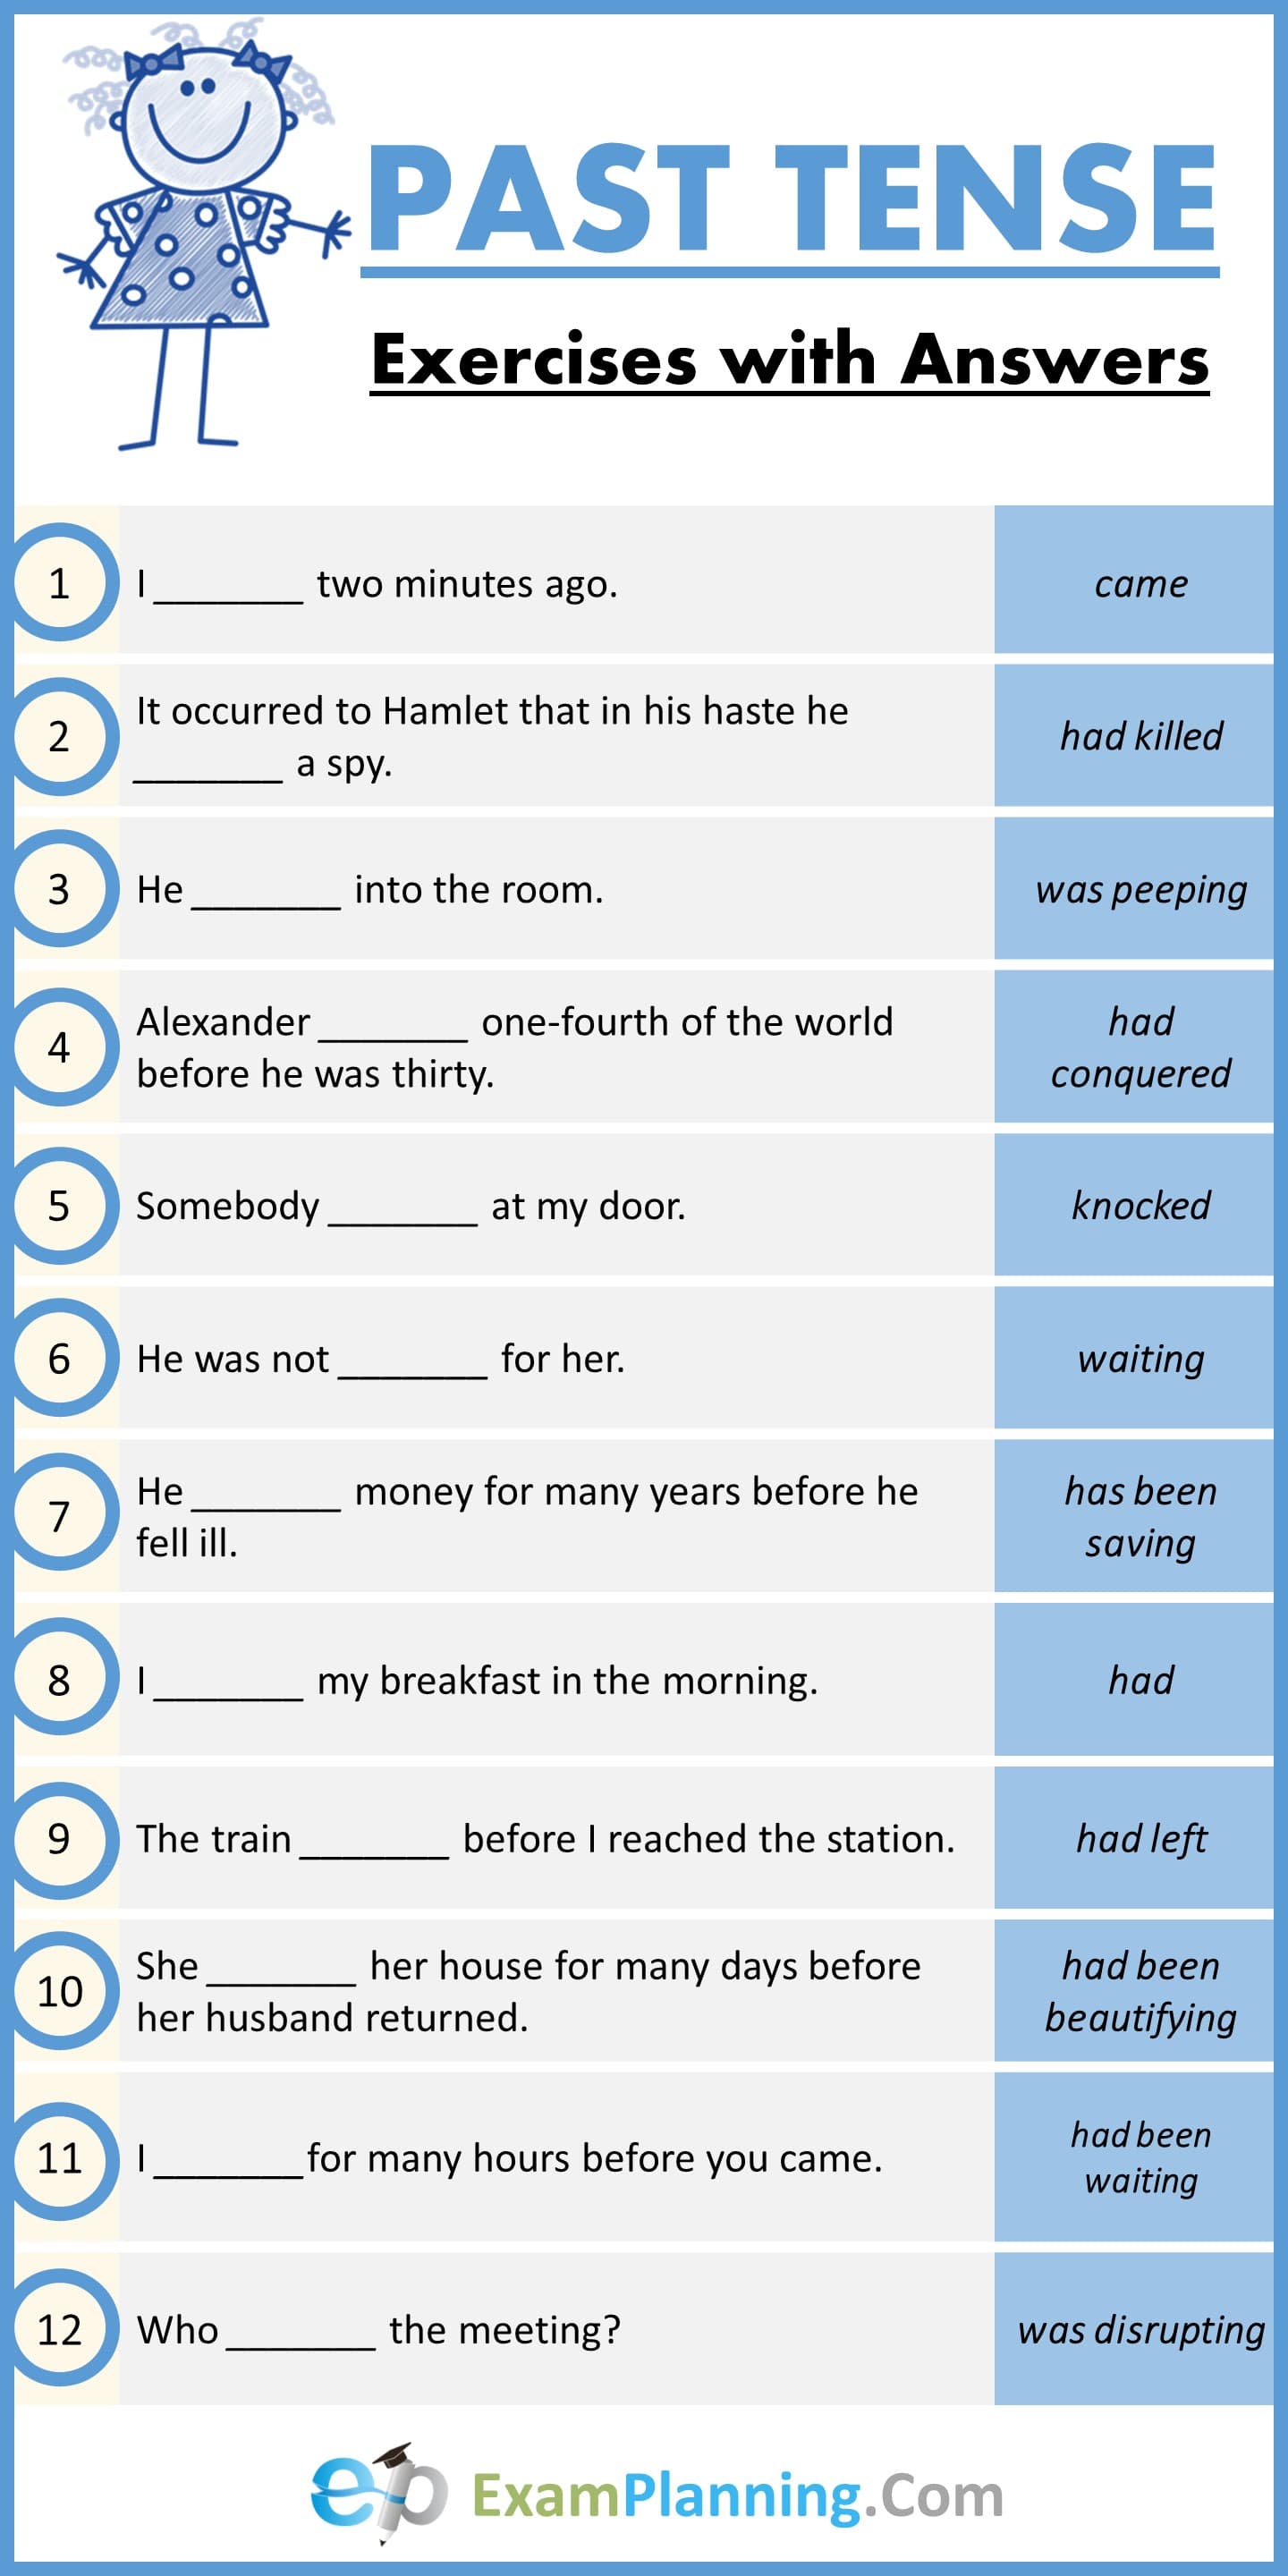 Simple Past Tense Worksheet English Grammer Exercises Simple Past Tense